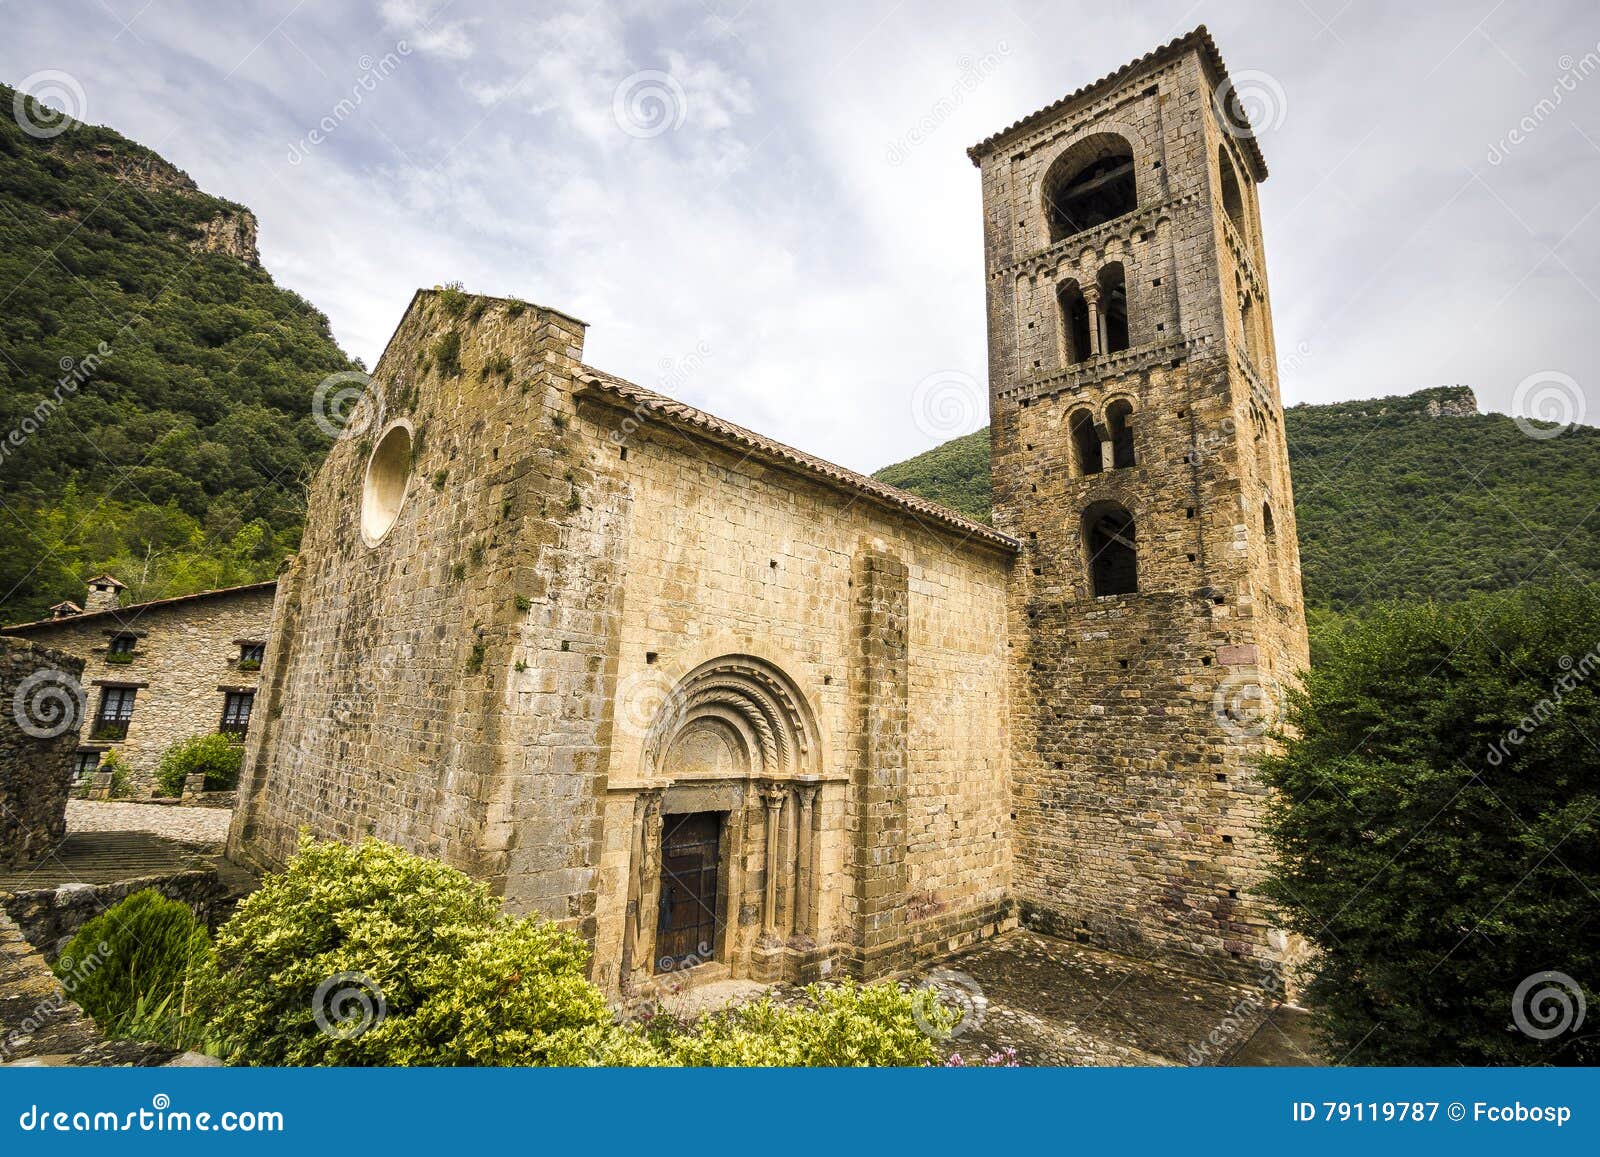 Iglesia De San Cristobal De Beget Stock Image - Image of tourist,  provincia: 79119787